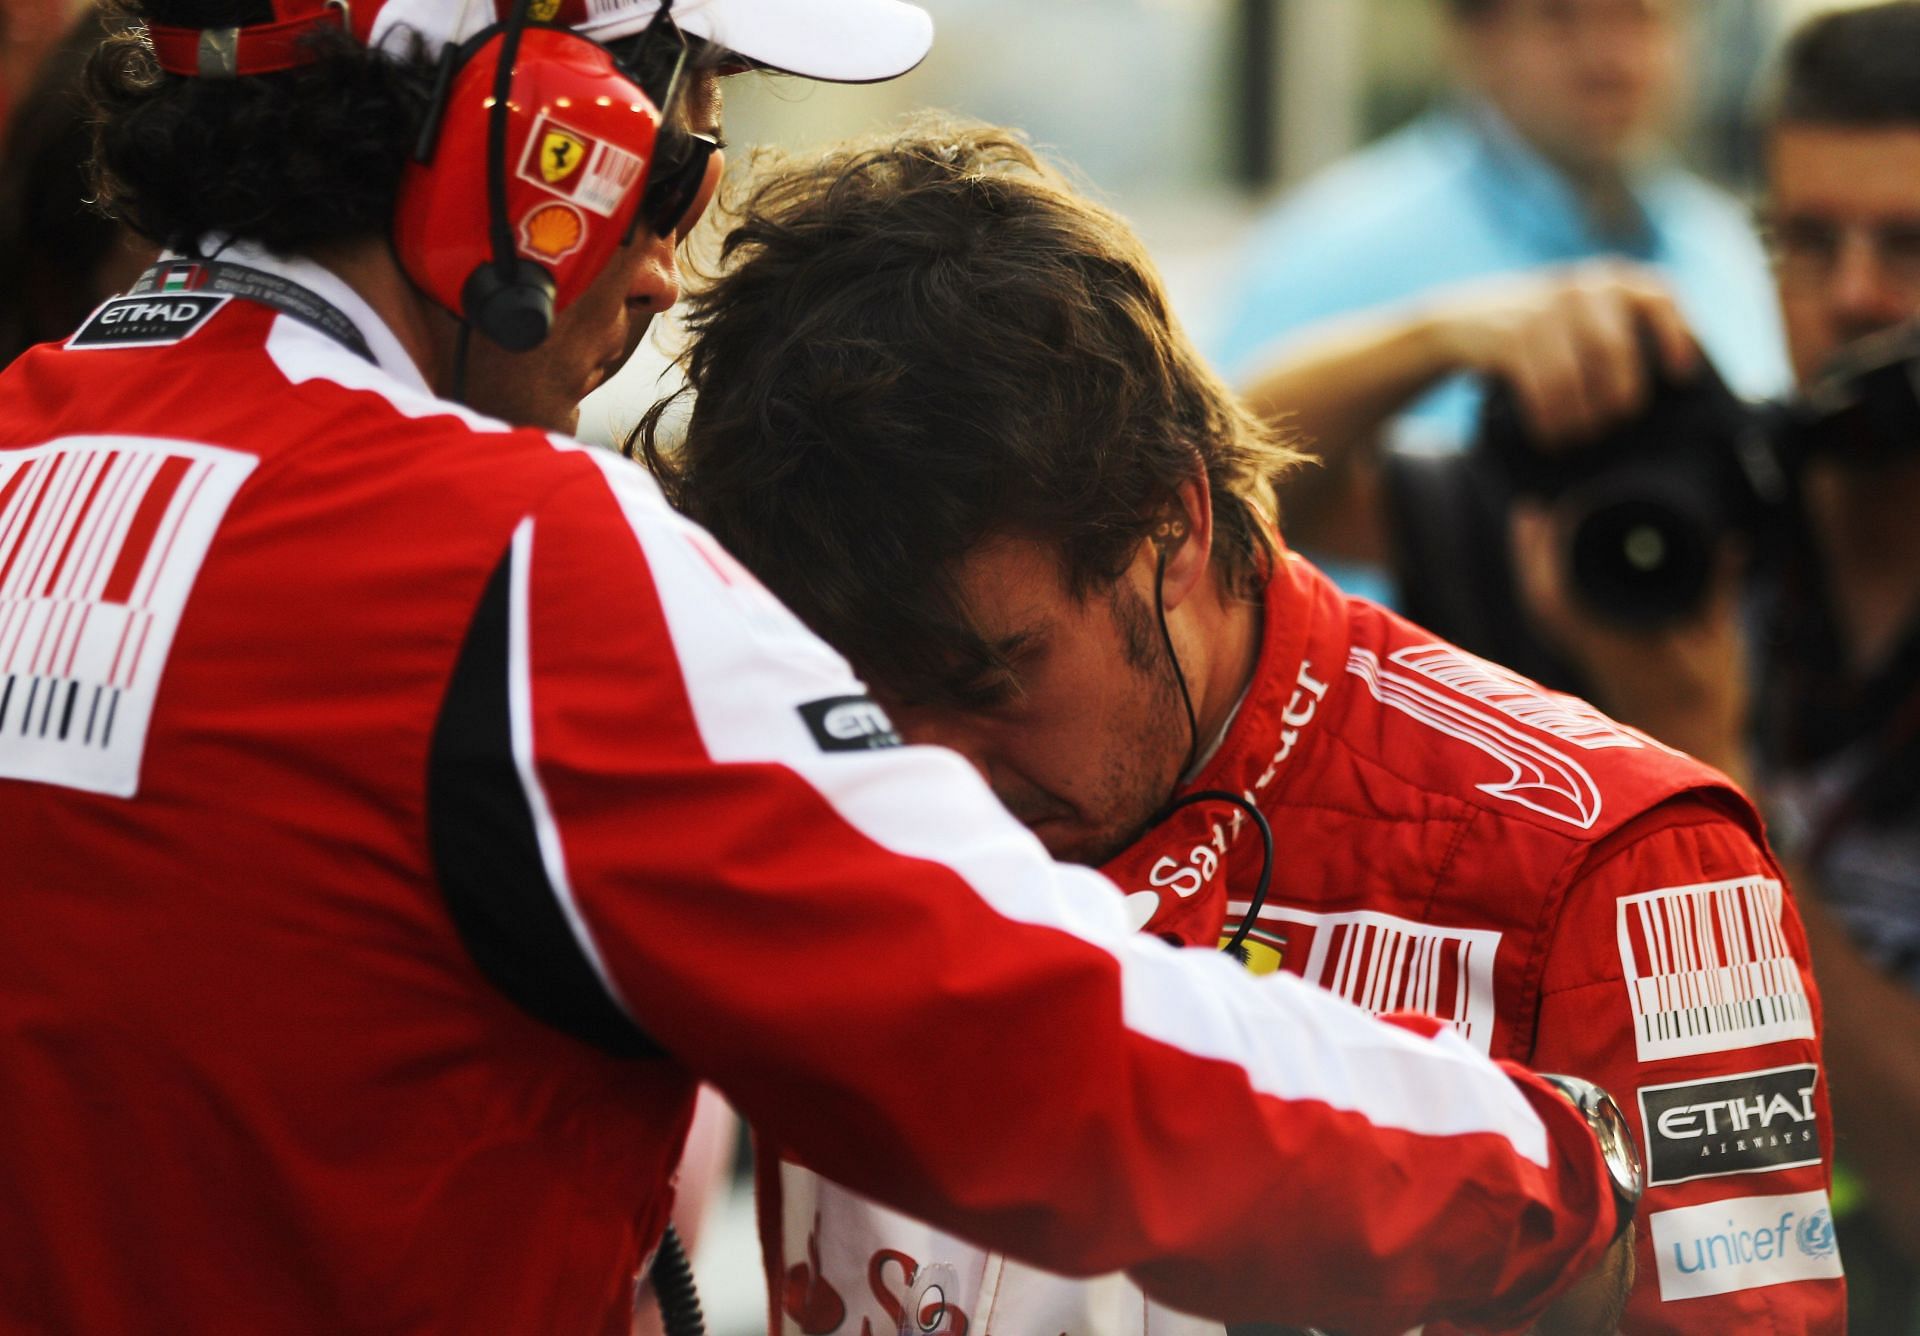 Remember Abu Dhabi GP 2010? Fernando Alonso surely does!